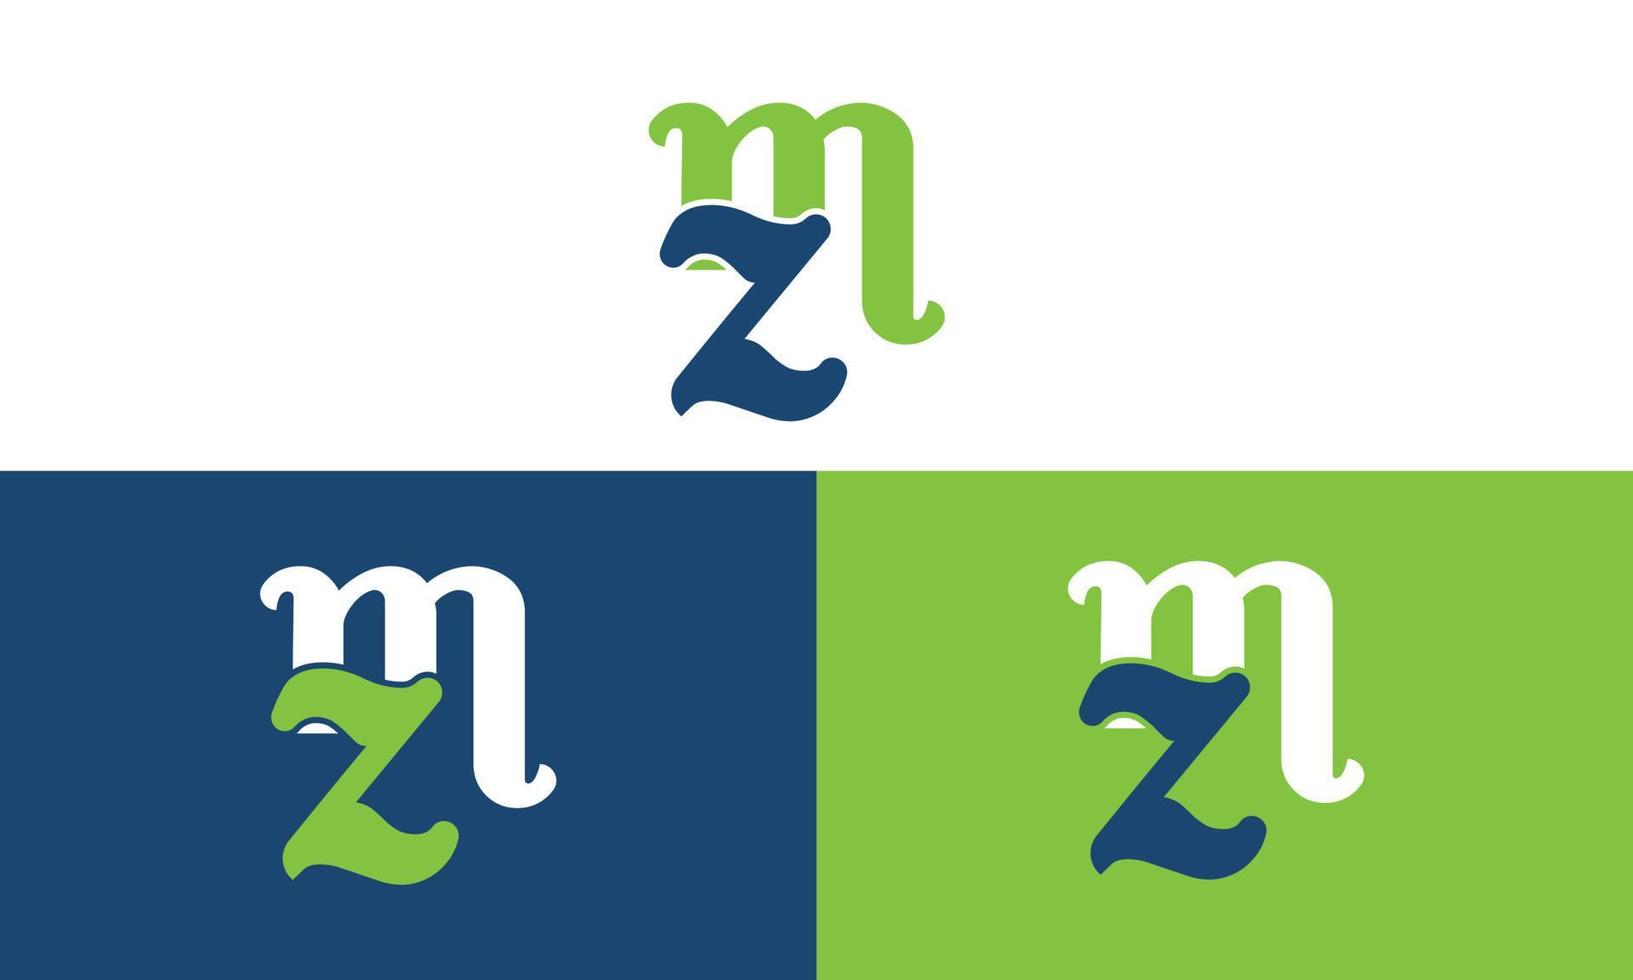 letras do alfabeto iniciais monograma logotipo mz, zm, m e z vetor